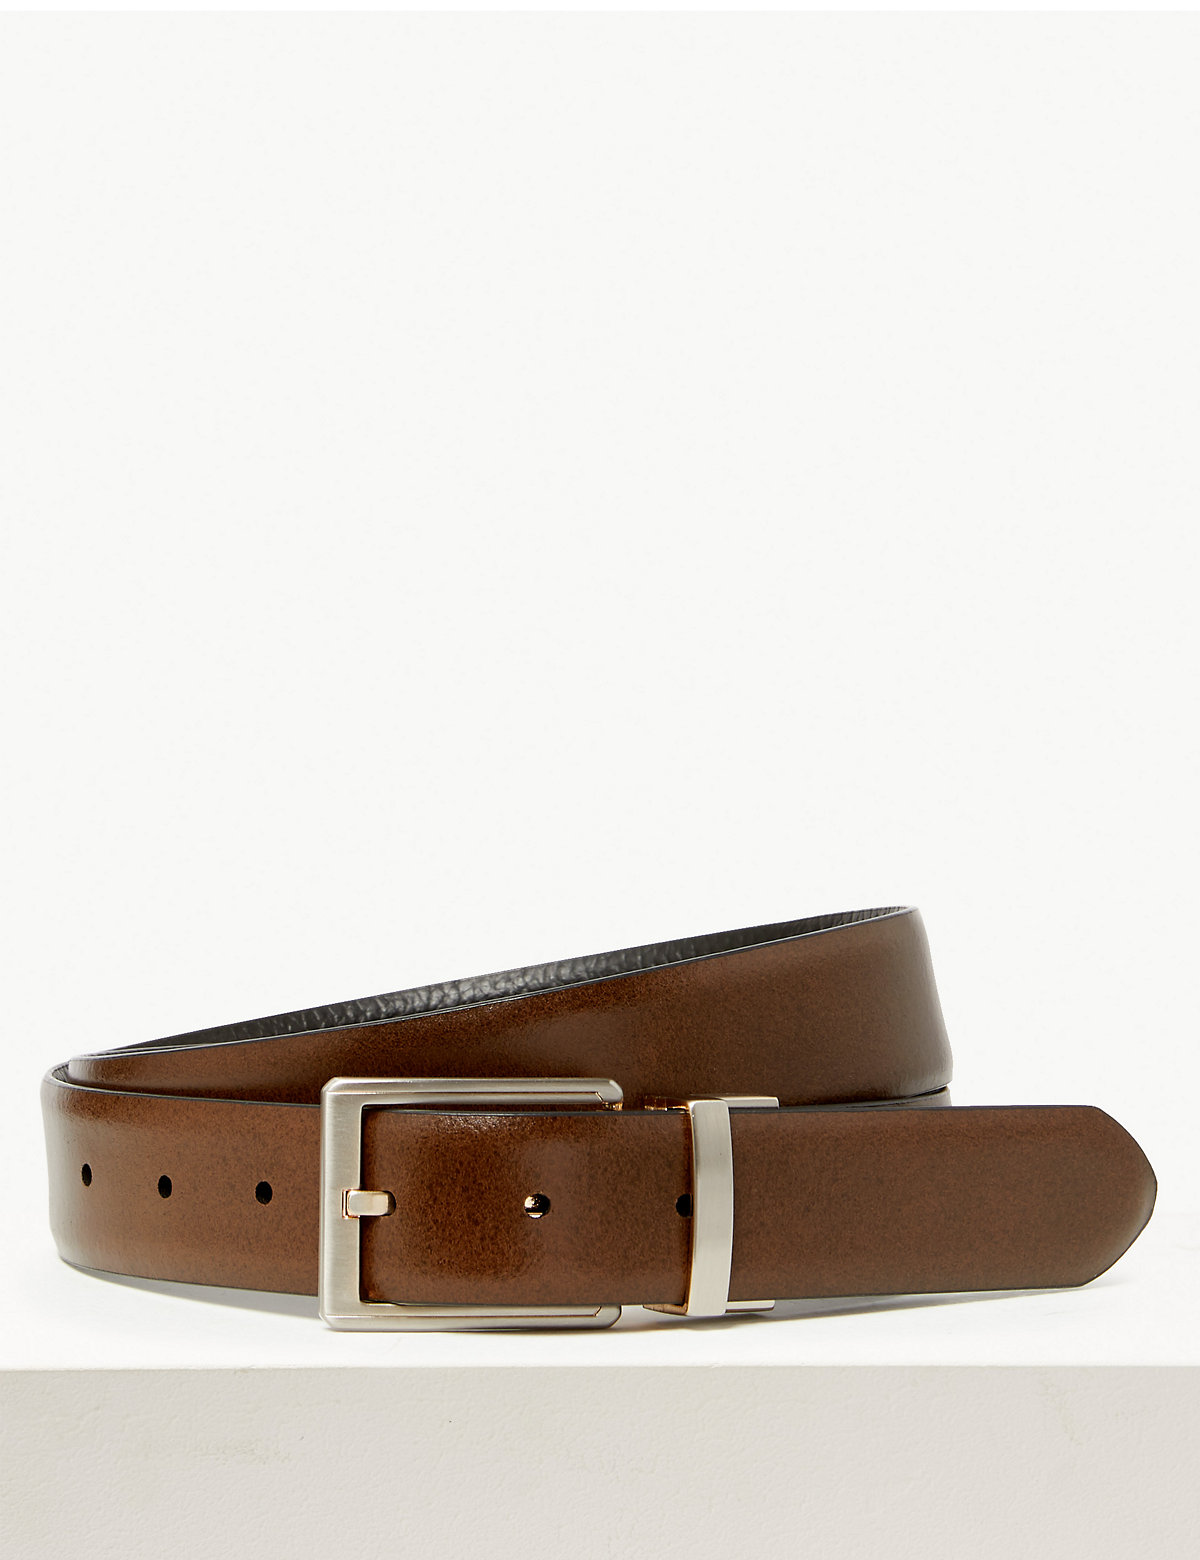 Leather Textured Reversible Belt